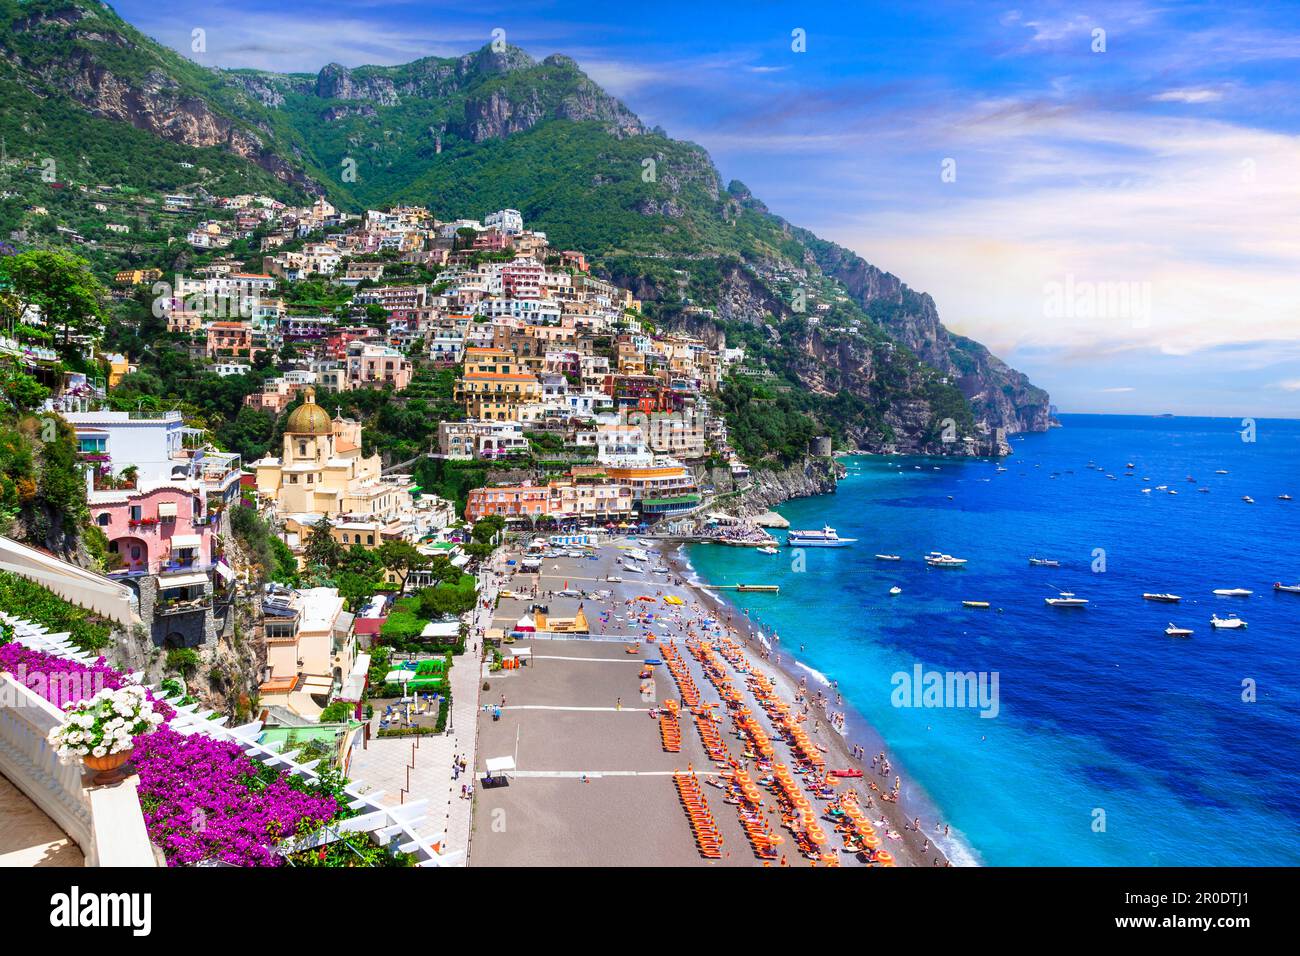 Italy - most beautiful scenic resort and town of Amalfi coast - Positano Stock Photo